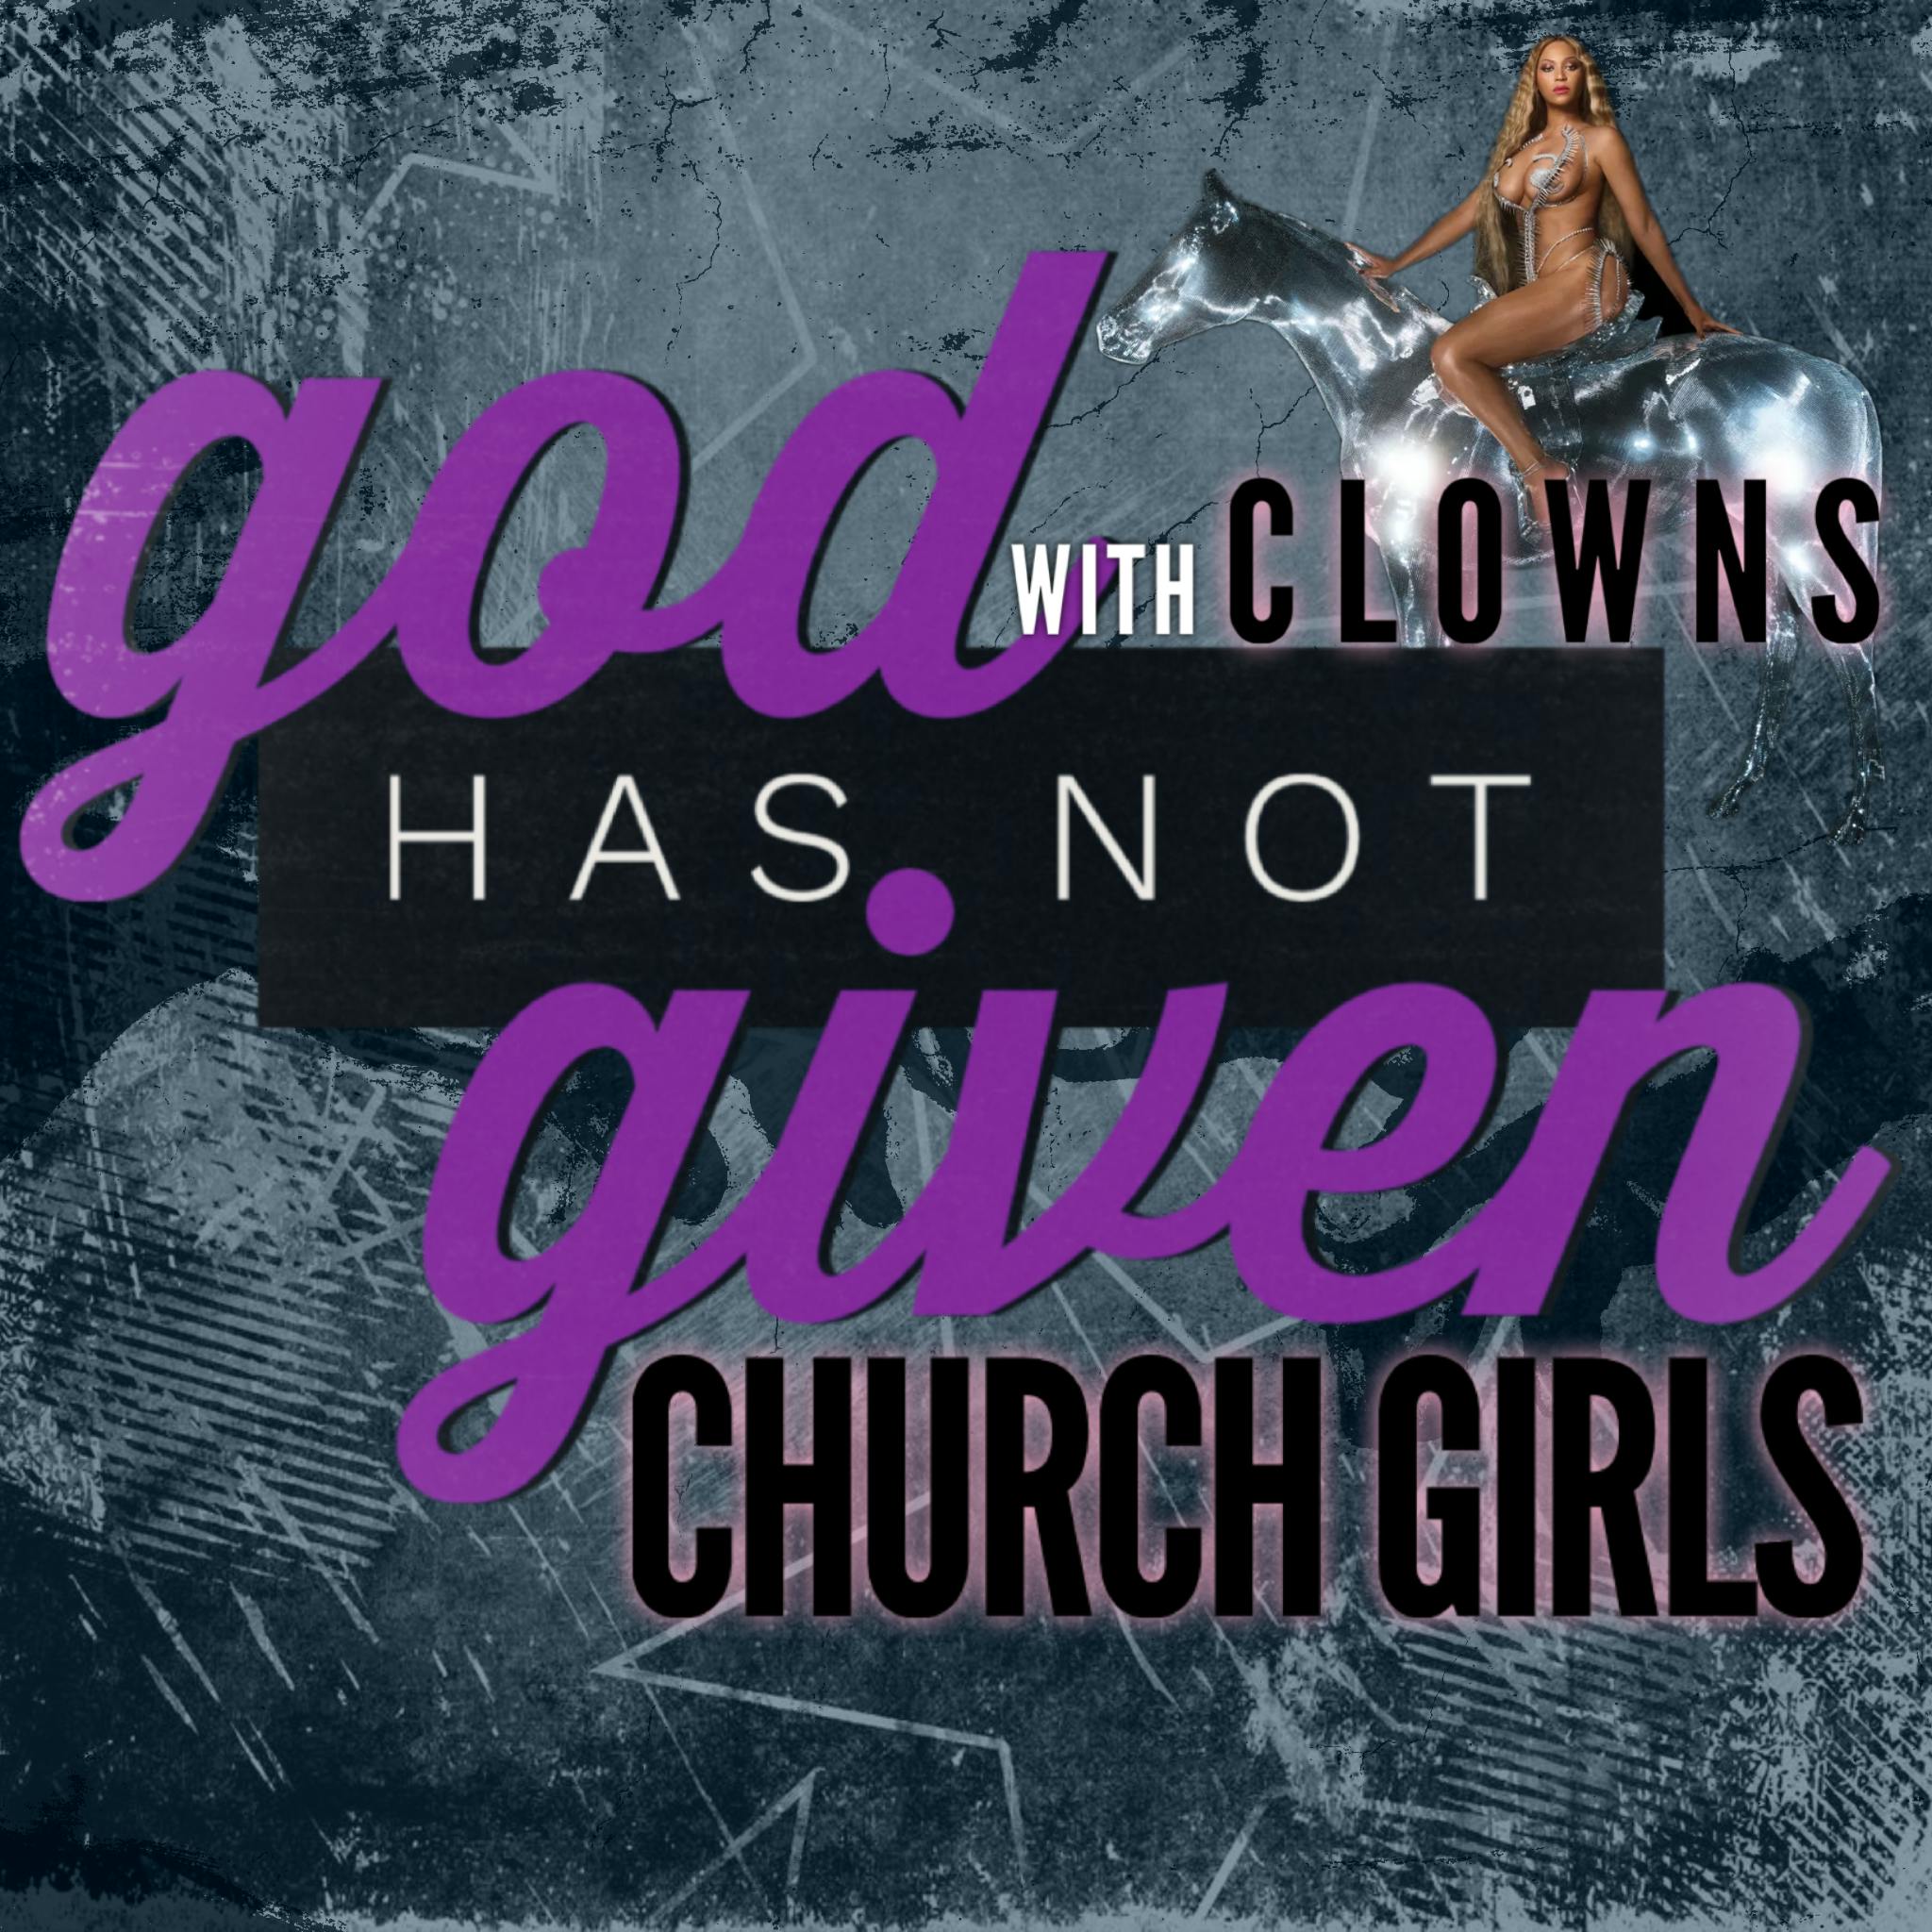 CHURCH GIRLS with Clowns